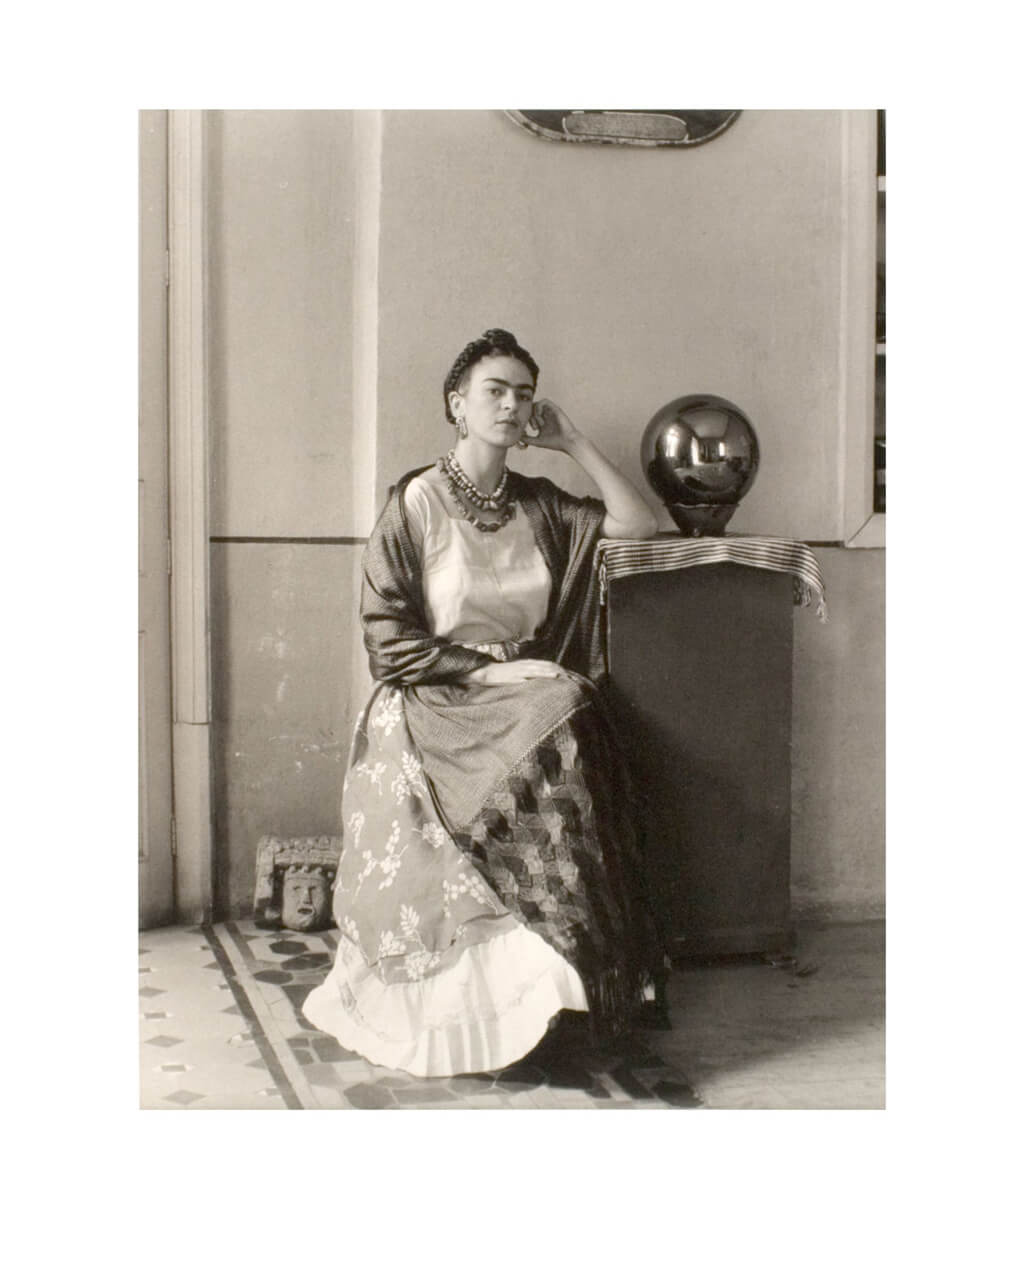 Manuel Álvarez Bravo (Mexican / Mexicano, 1902–2002). Frida Kahlo con globo (Frida Kahlo with Globe), c. 1930s negative, printed before 1992